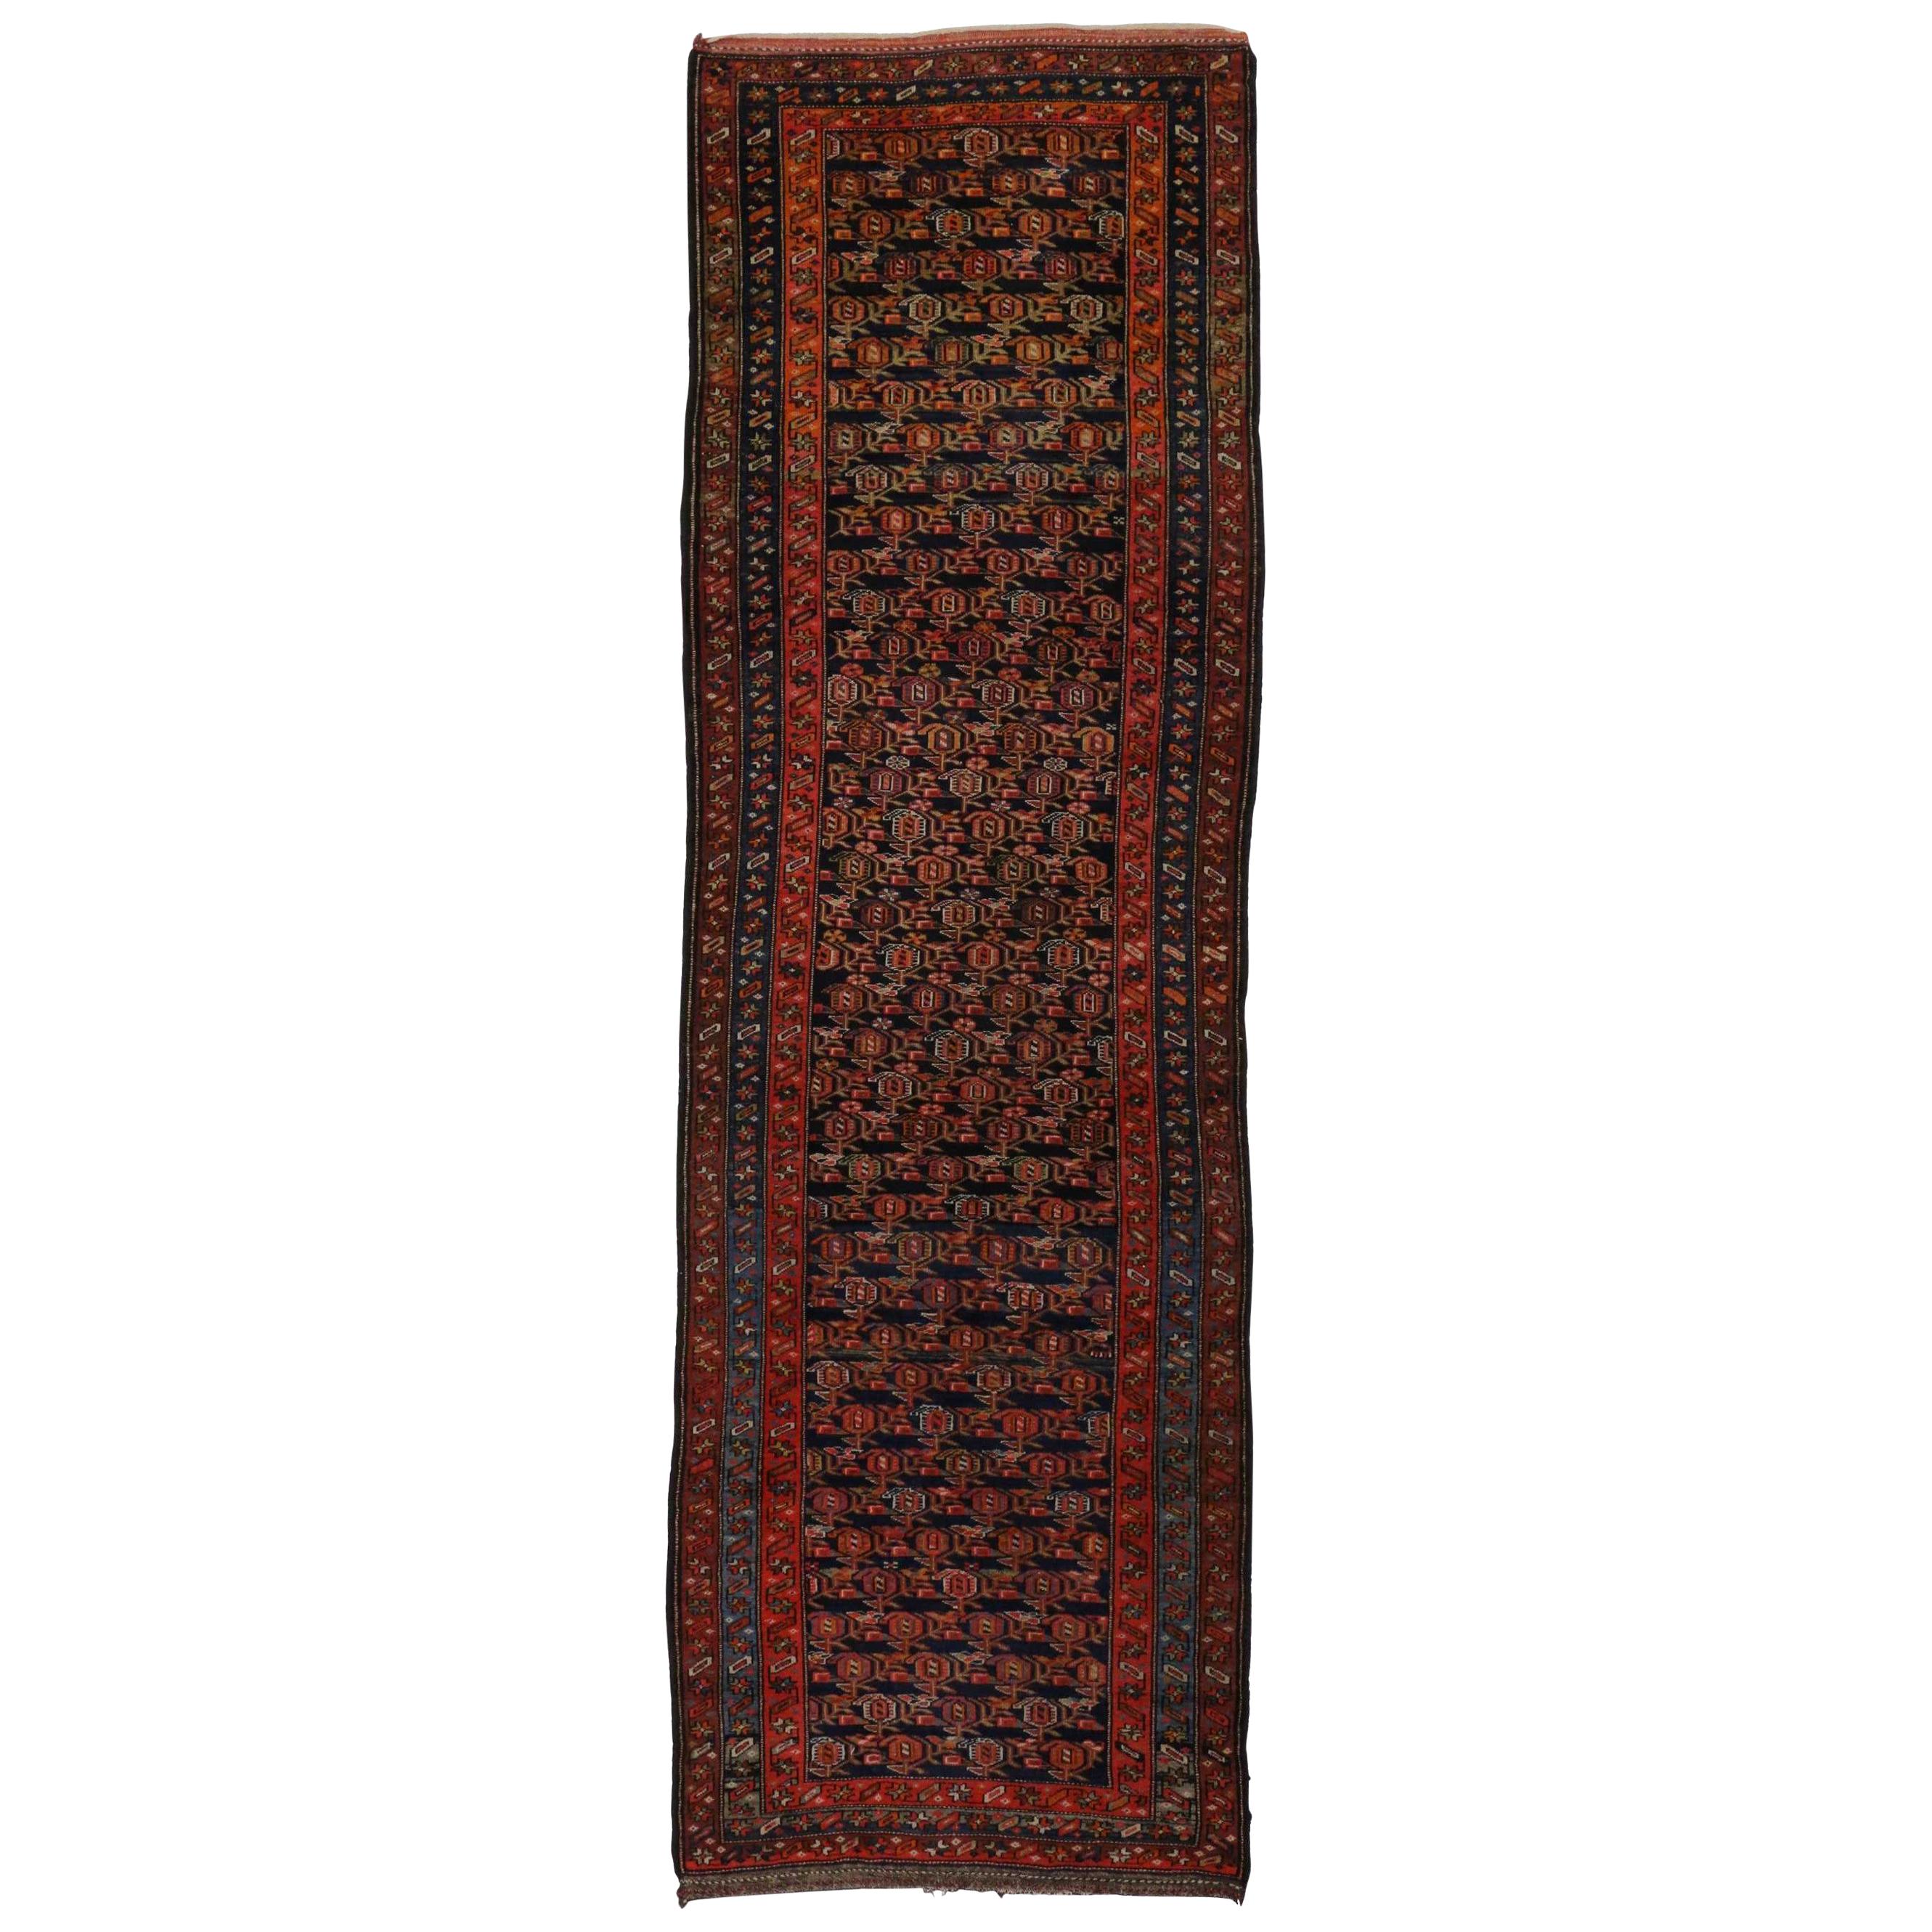 Tapis de couloir persan antique kurde, long tapis de couloir kurde avec motif Boteh